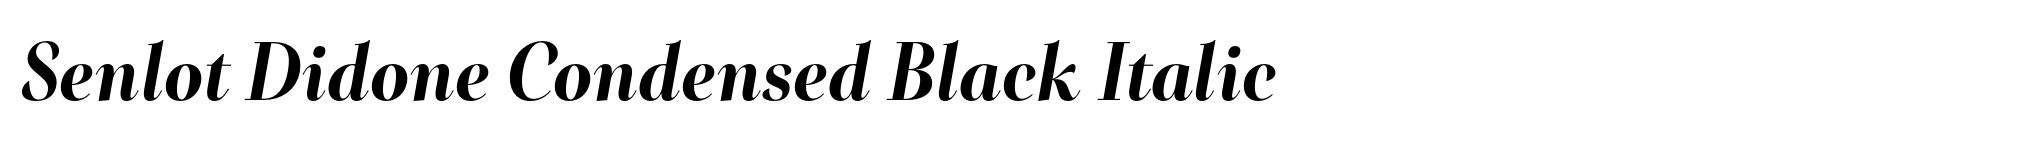 Senlot Didone Condensed Black Italic image